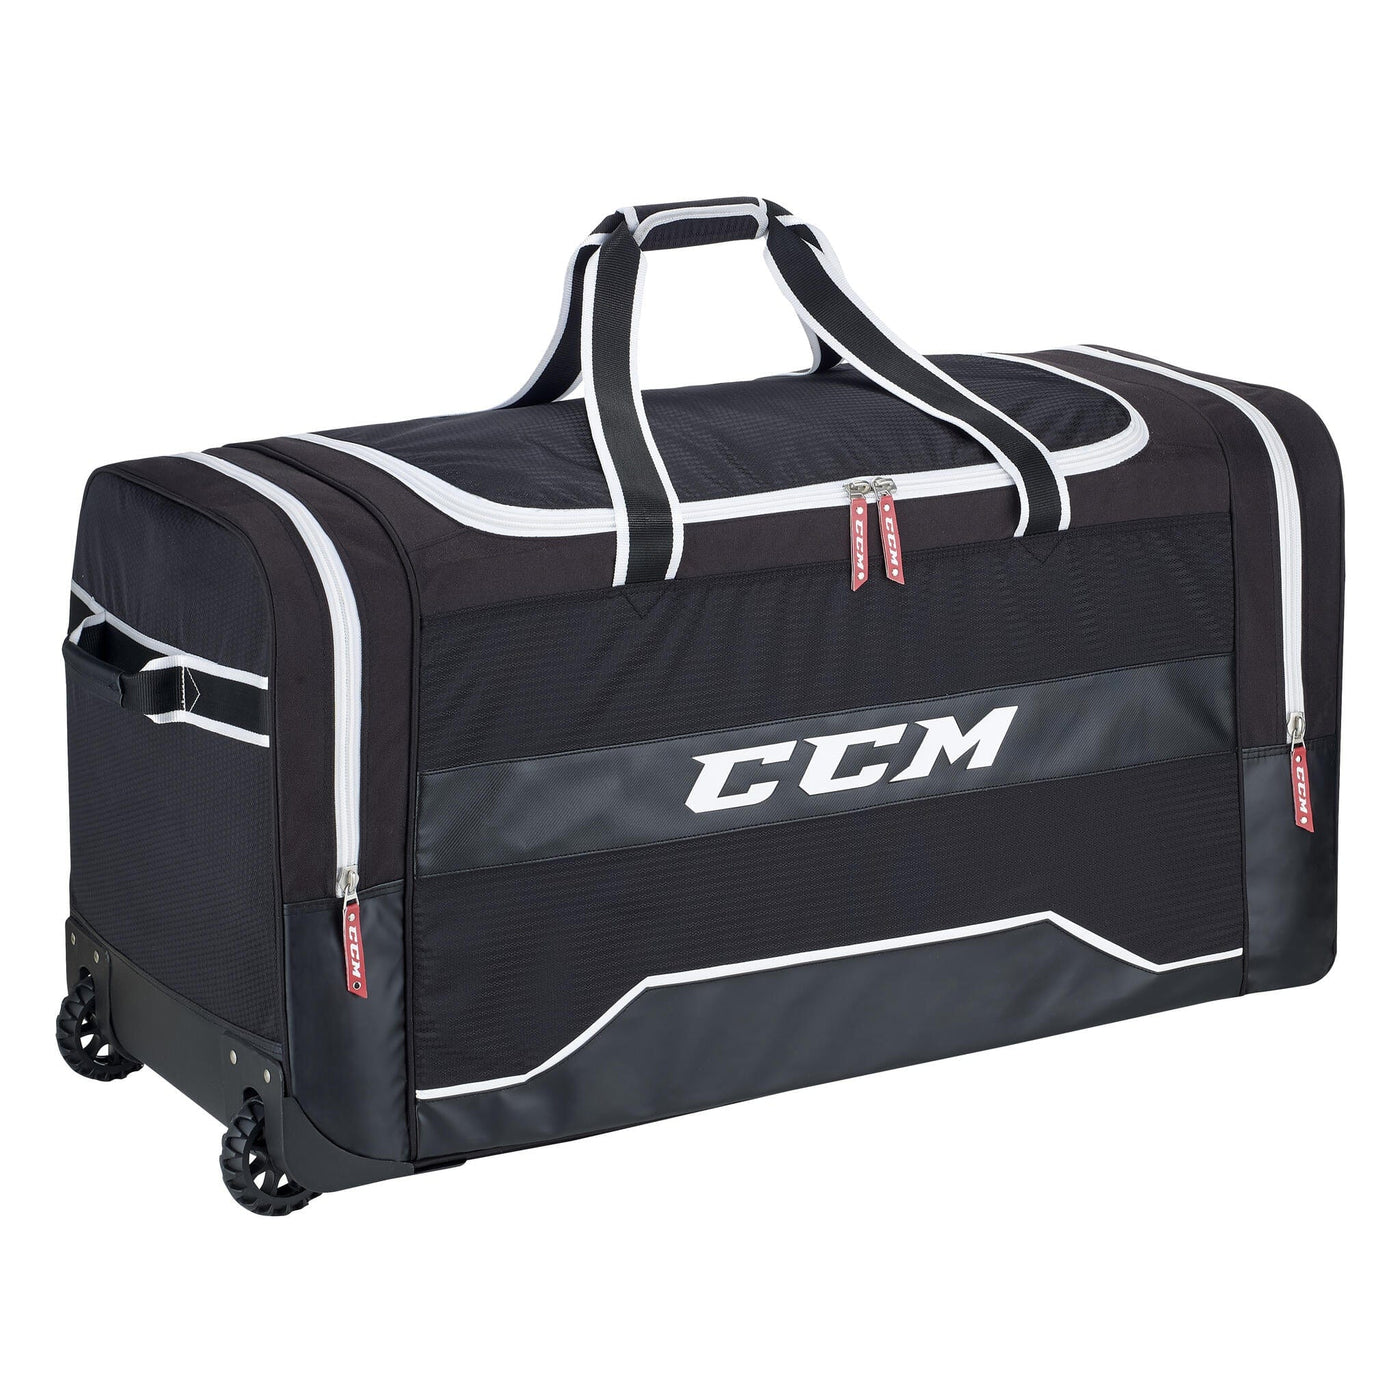 CCM 380 Deluxe Senior Wheel Hockey Bag - TheHockeyShop.com